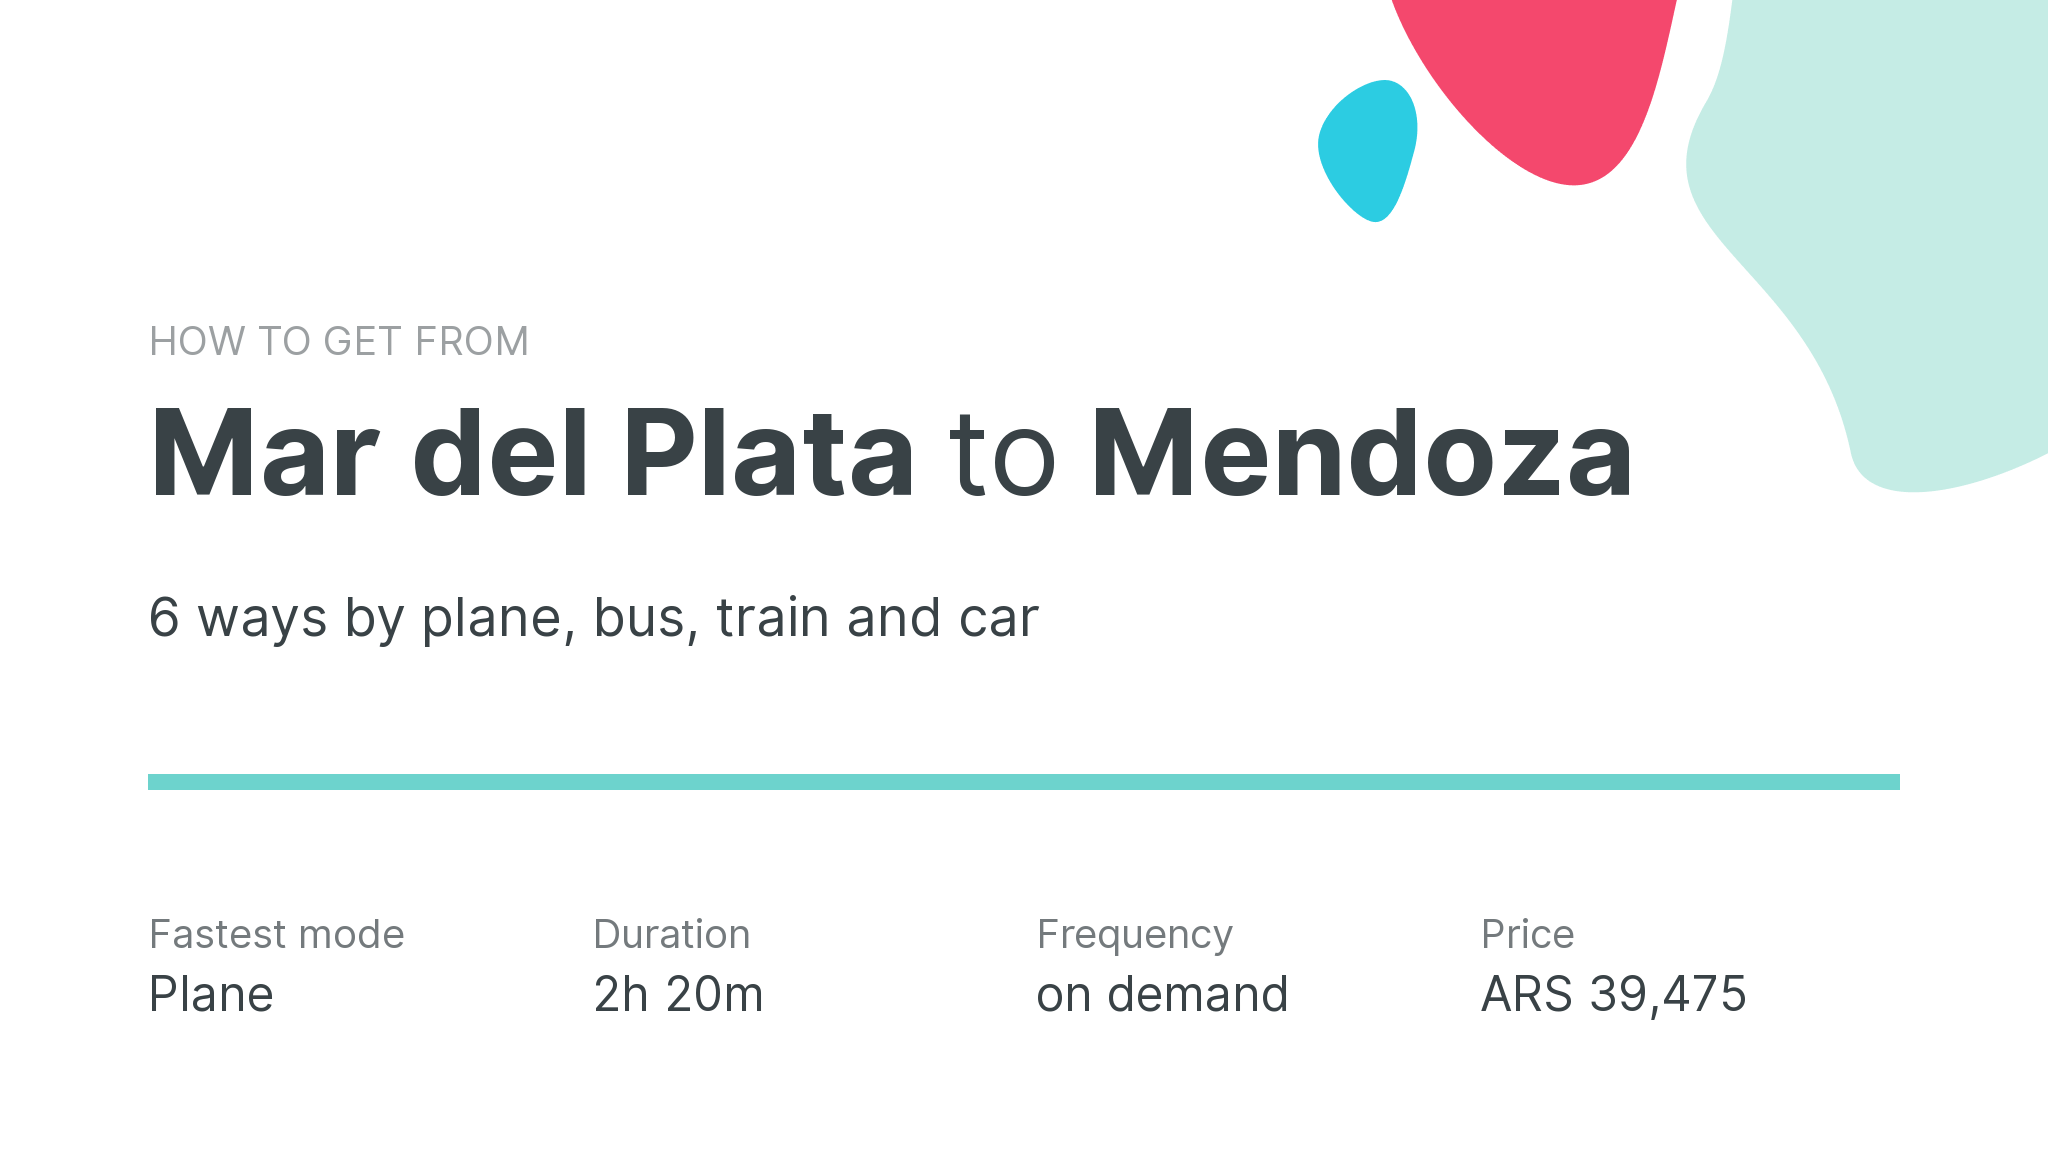 How do I get from Mar del Plata to Mendoza